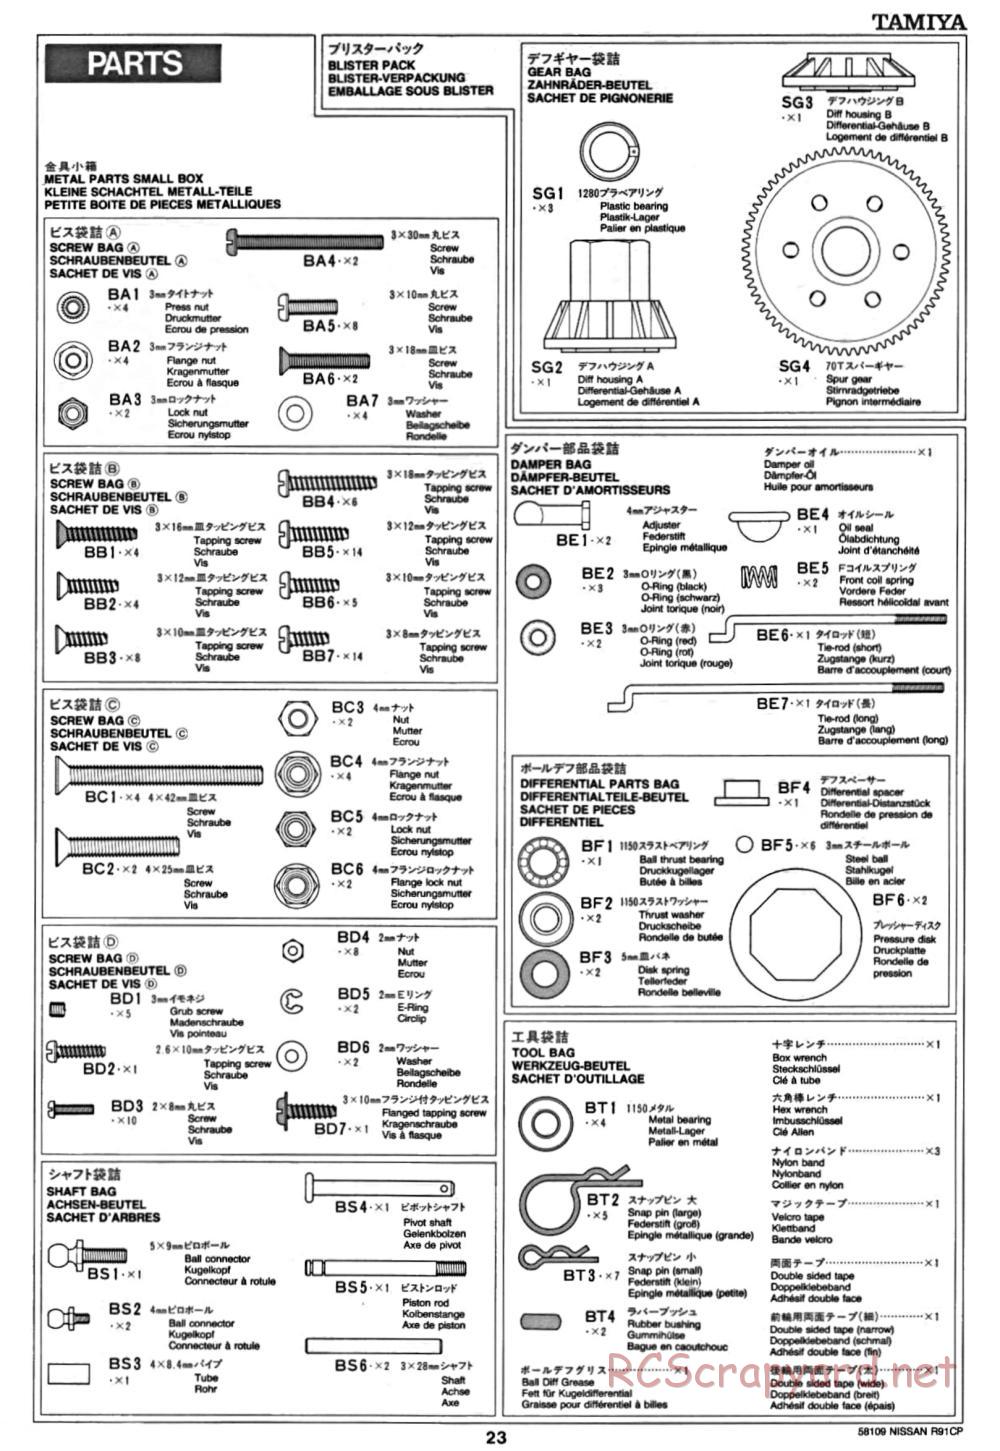 Tamiya - Nissan R91CP - Group-C Chassis - Manual - Page 23